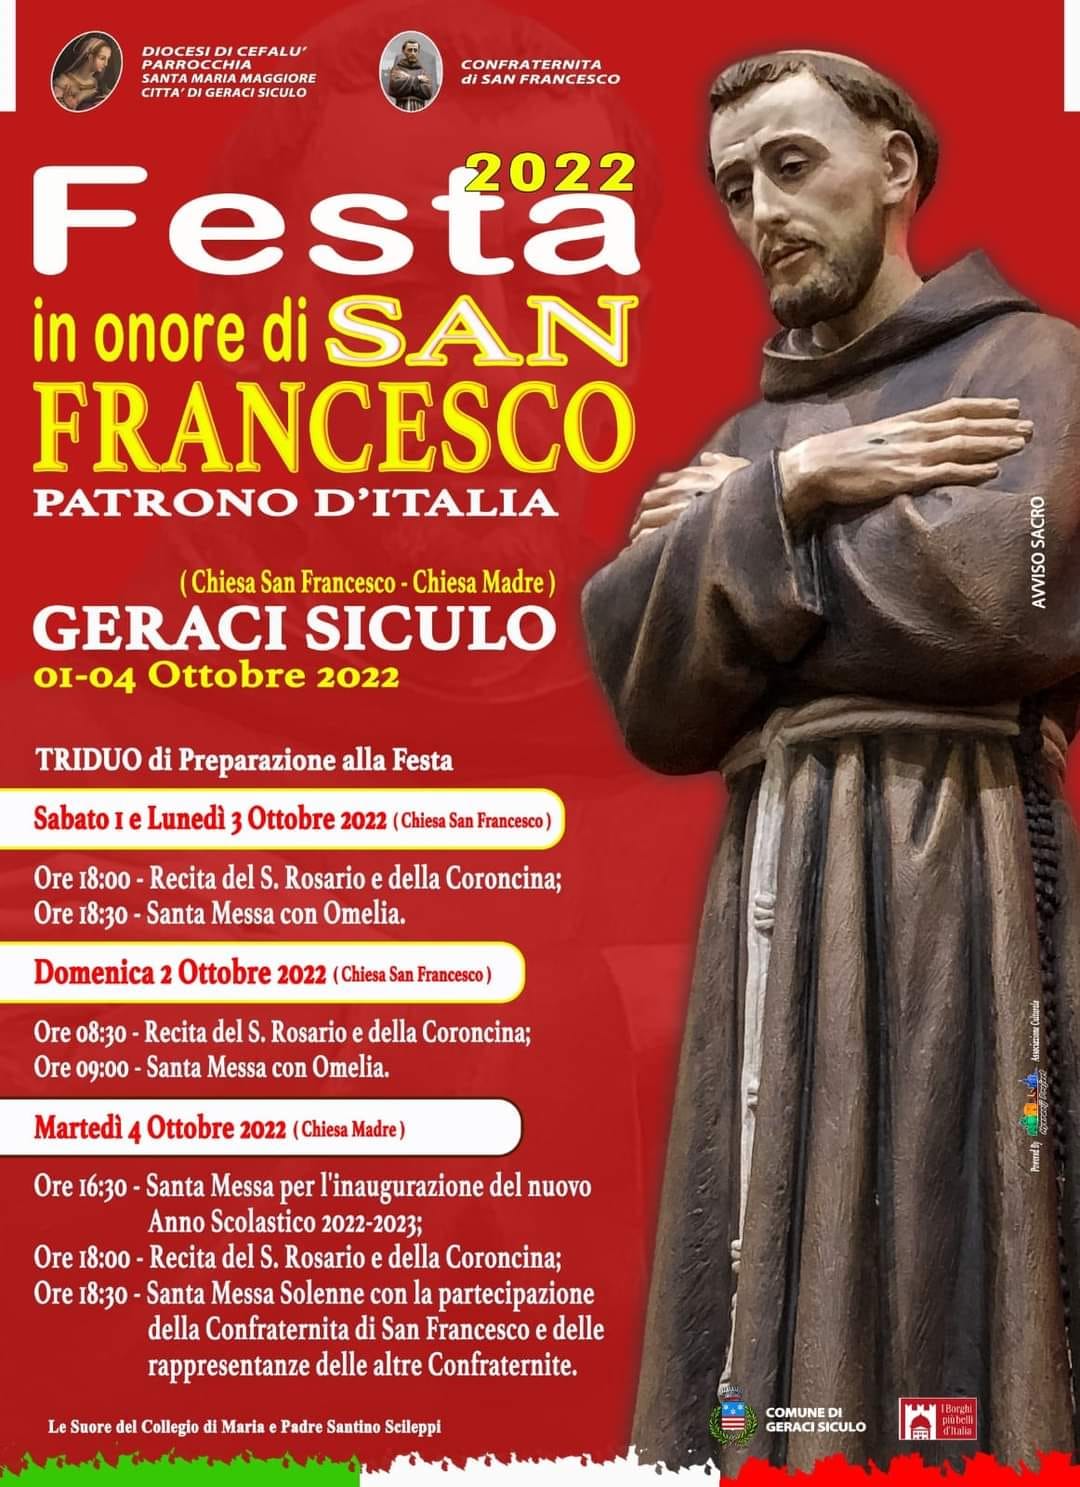 San Francesco Patrono d